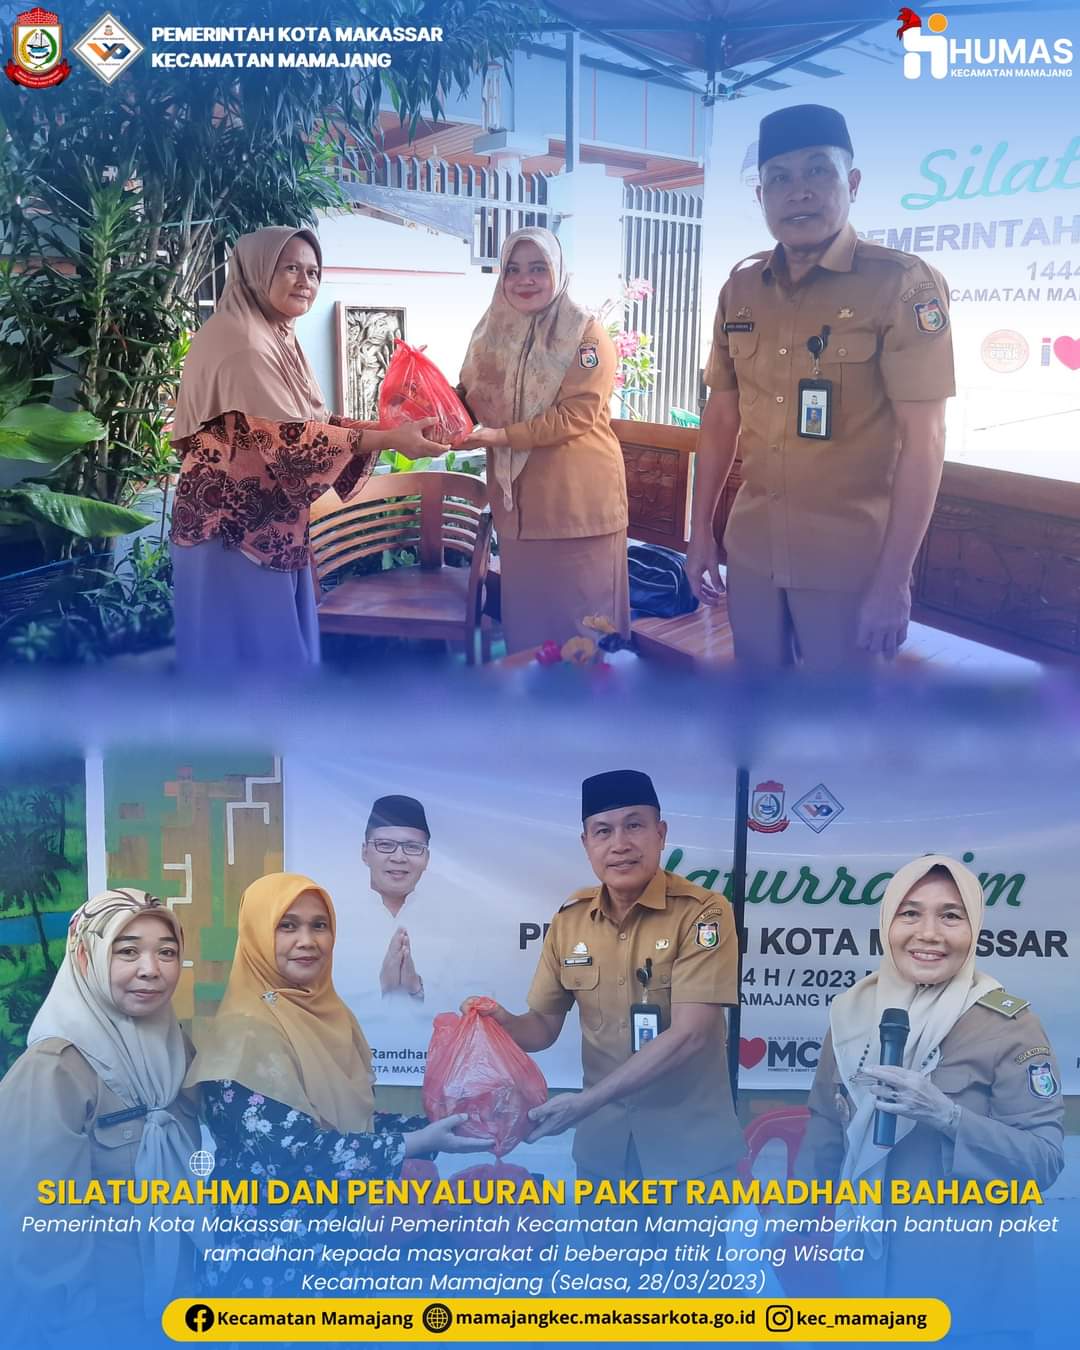 Gambar Pemerintah Kota Makassar Melalui Pemerintah Kecamatan Mamajang Gelar Silaturahmi Dan Penyaluran Paket Ramadhan Bahagia